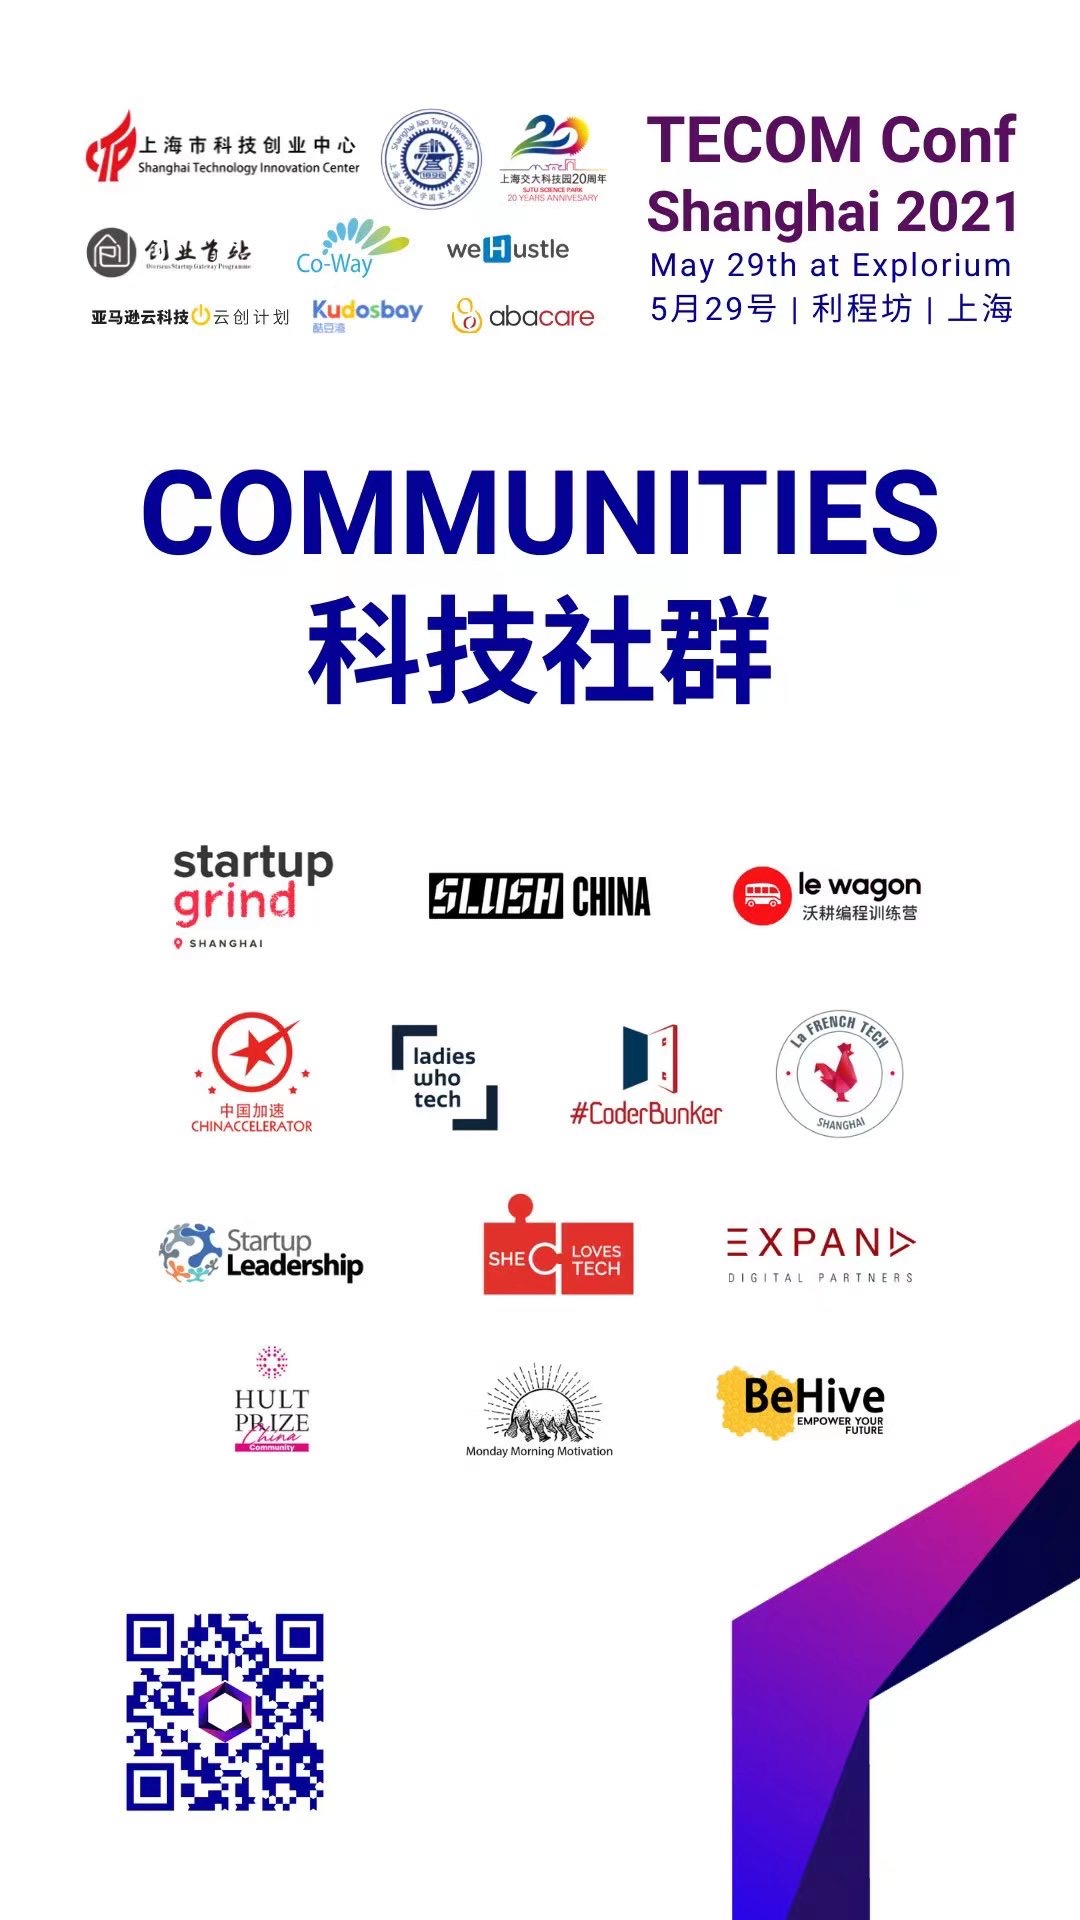 TECOM Conf Shanghai 2021 | Shanghai Events